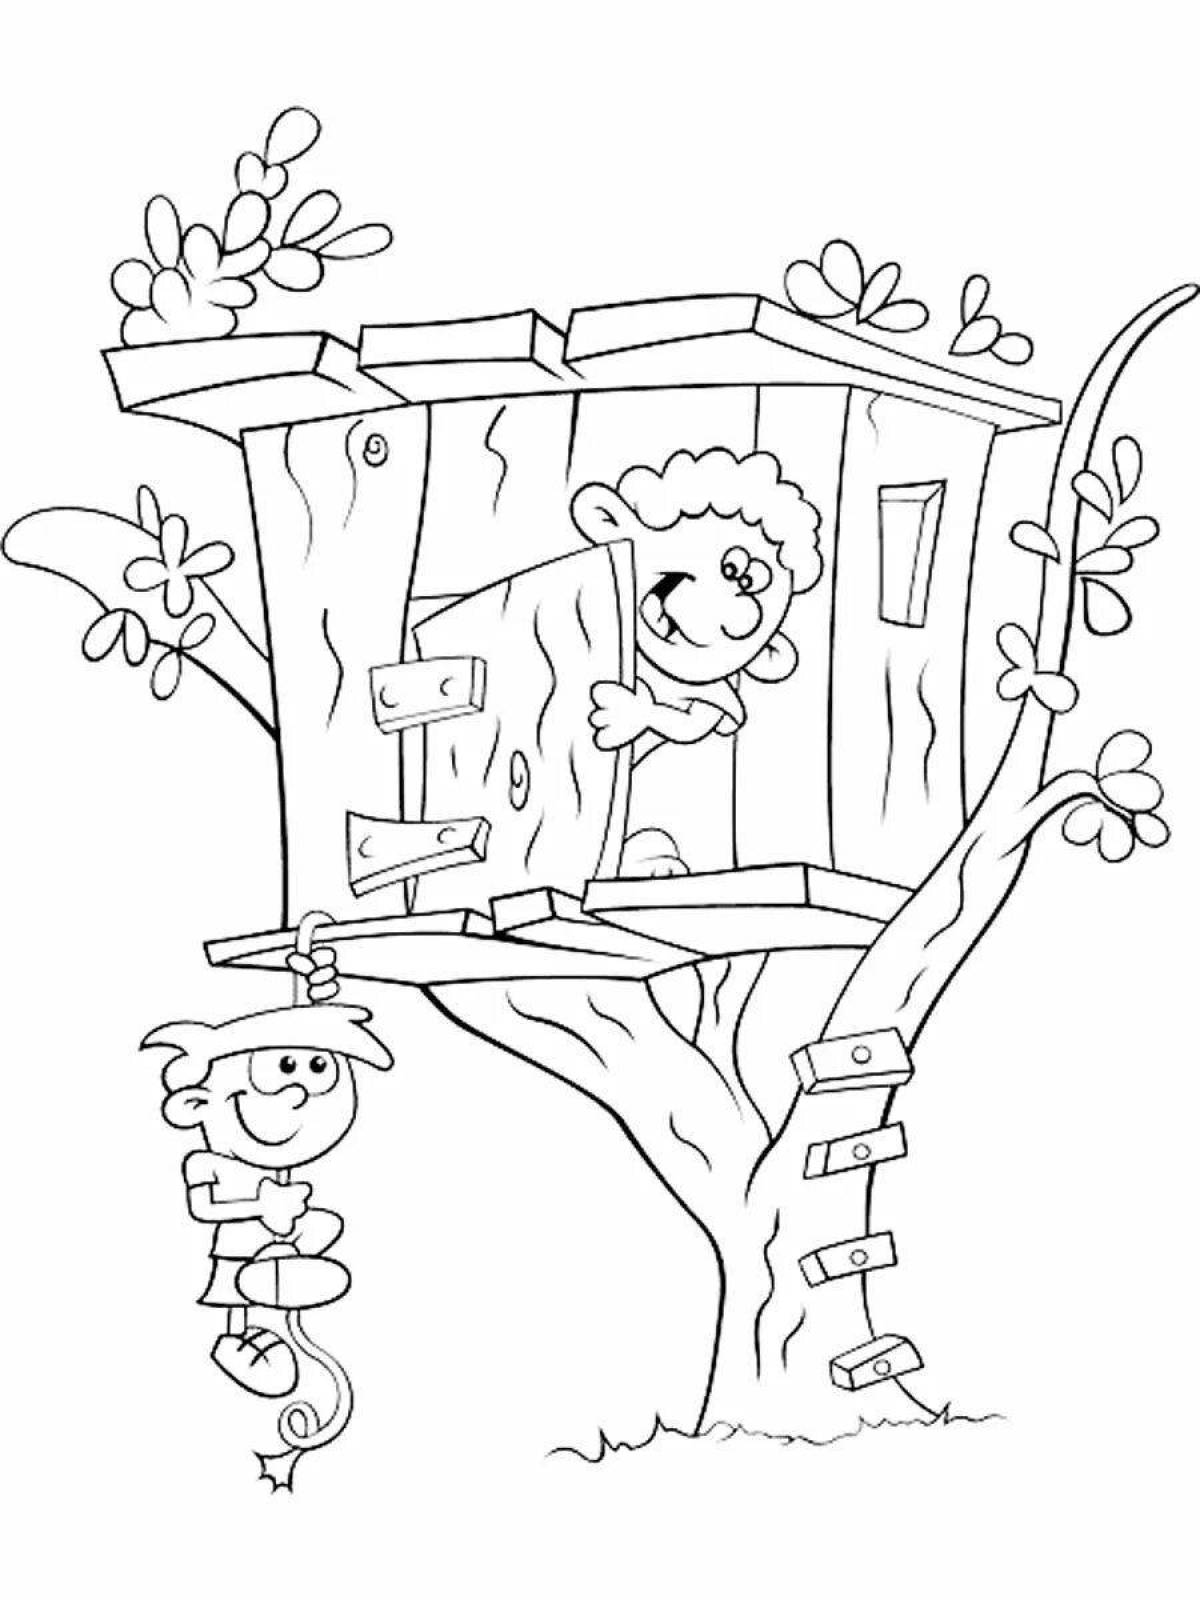 Разукрашка домик на дереве